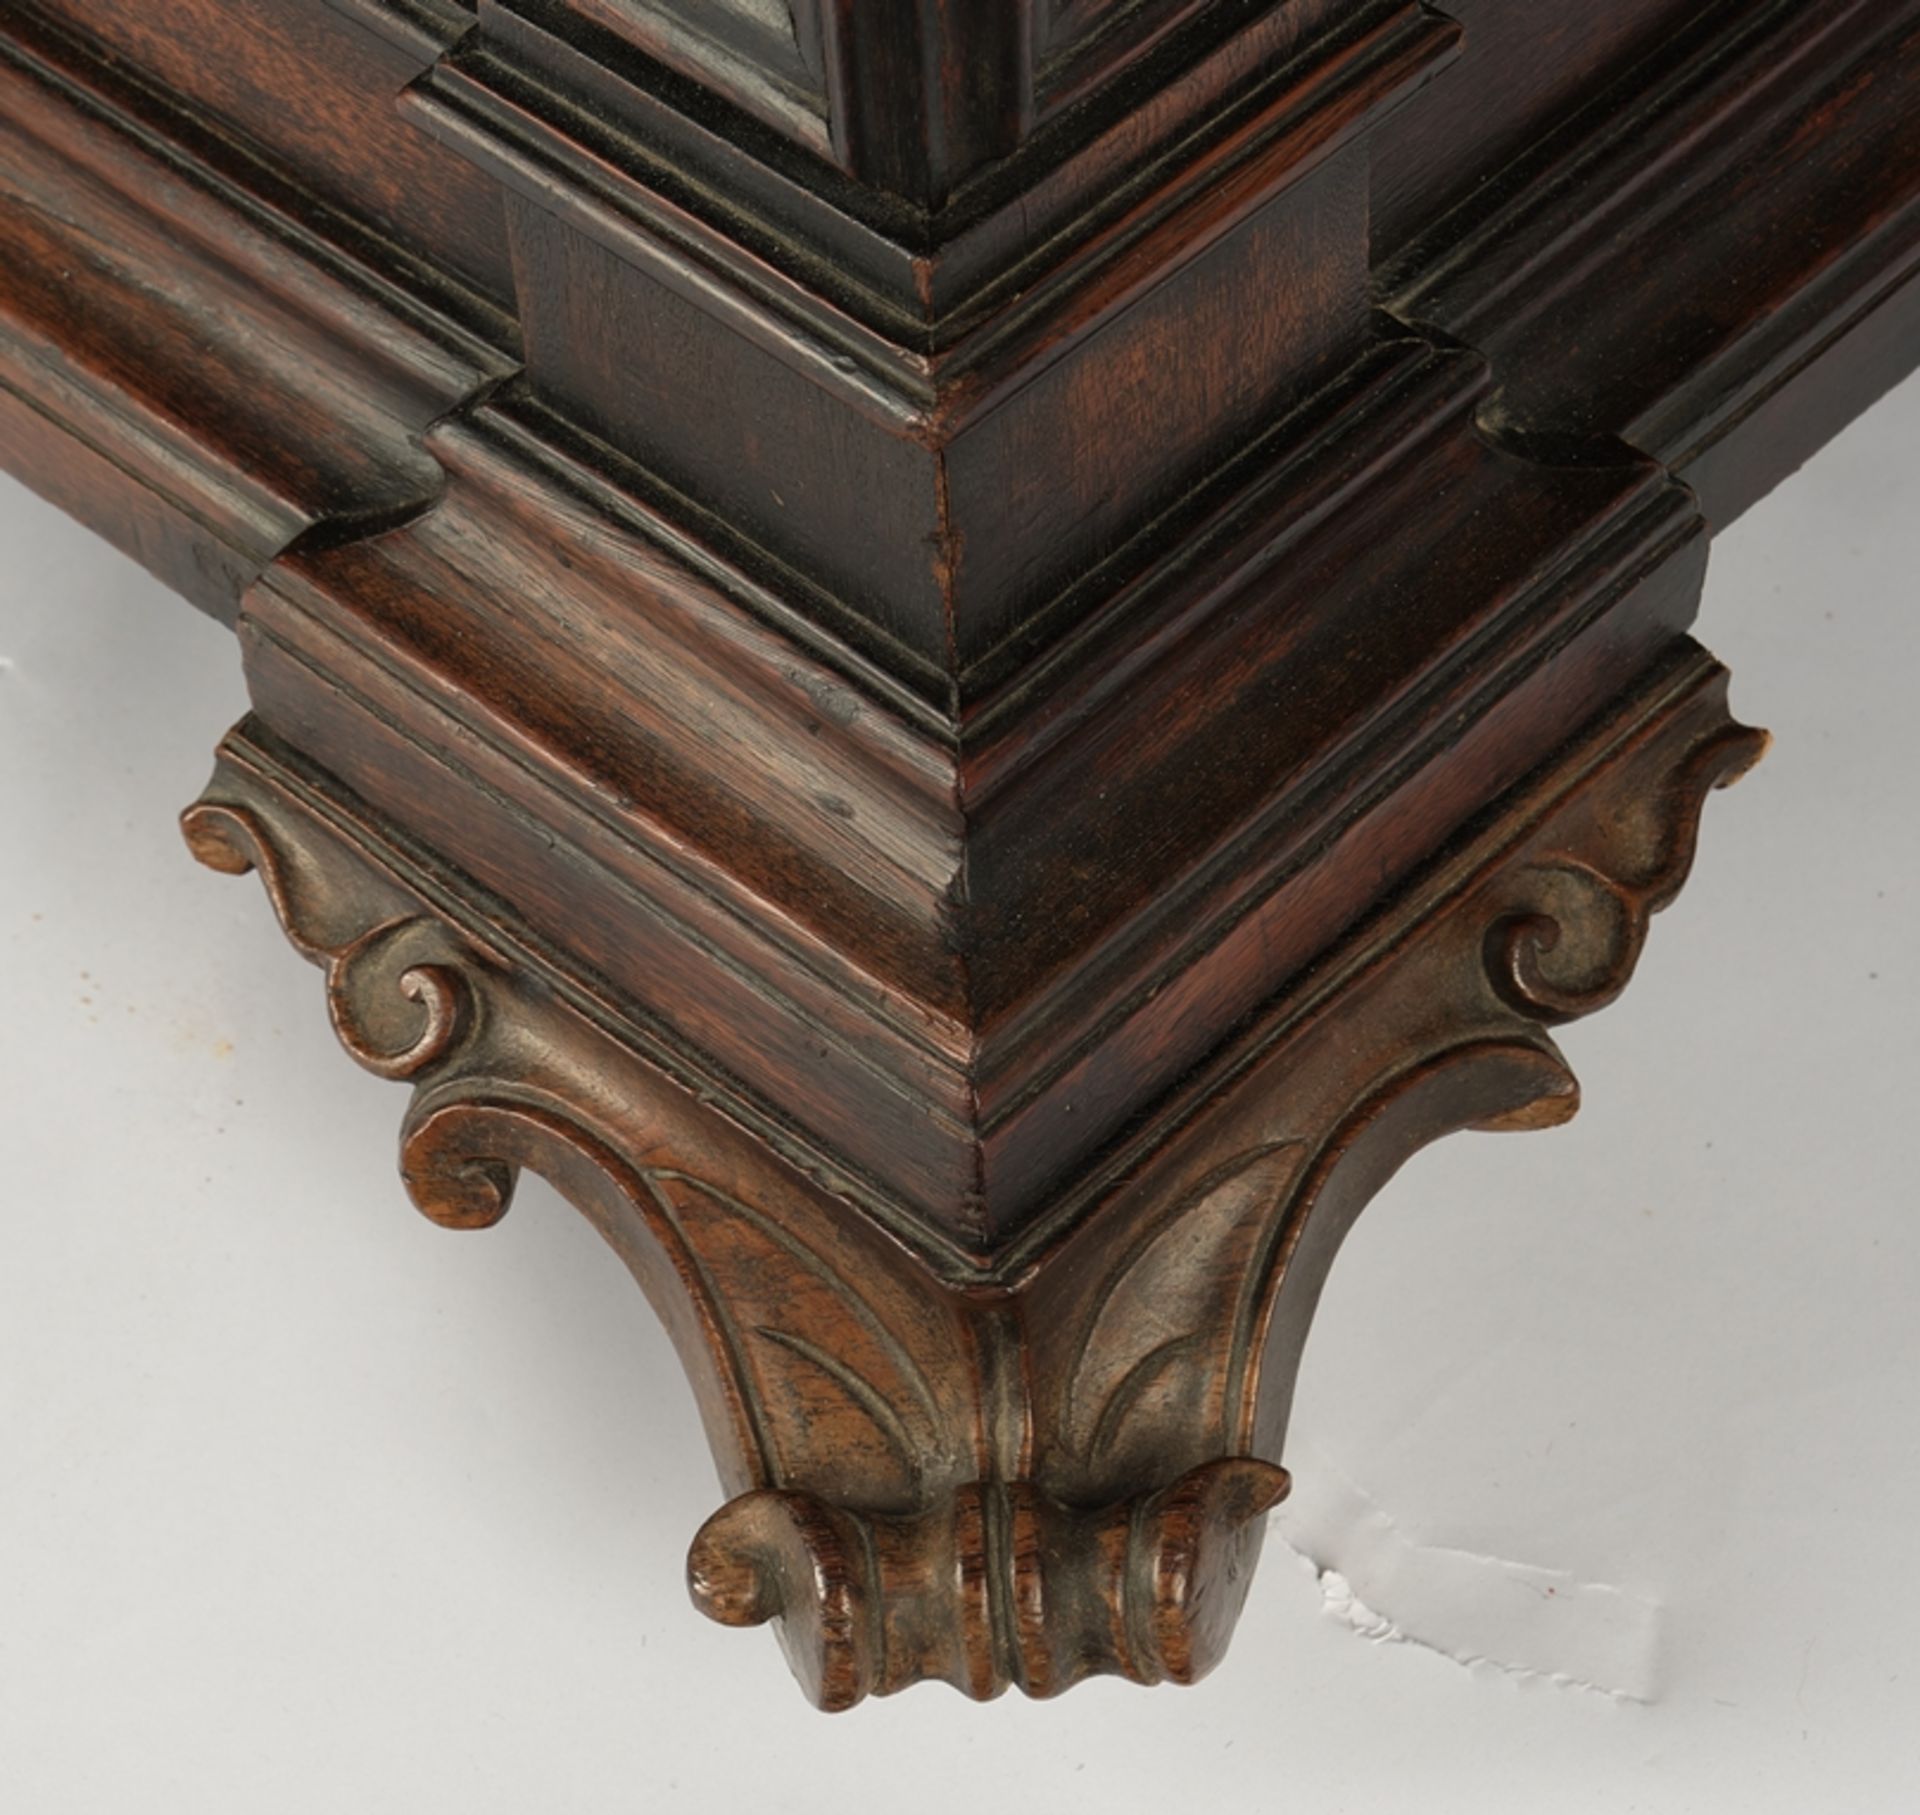 Baroque chest, Portugal/Brazil, 17th/18th century, reddish hardwood, rectangular body with flat lid - Image 5 of 7